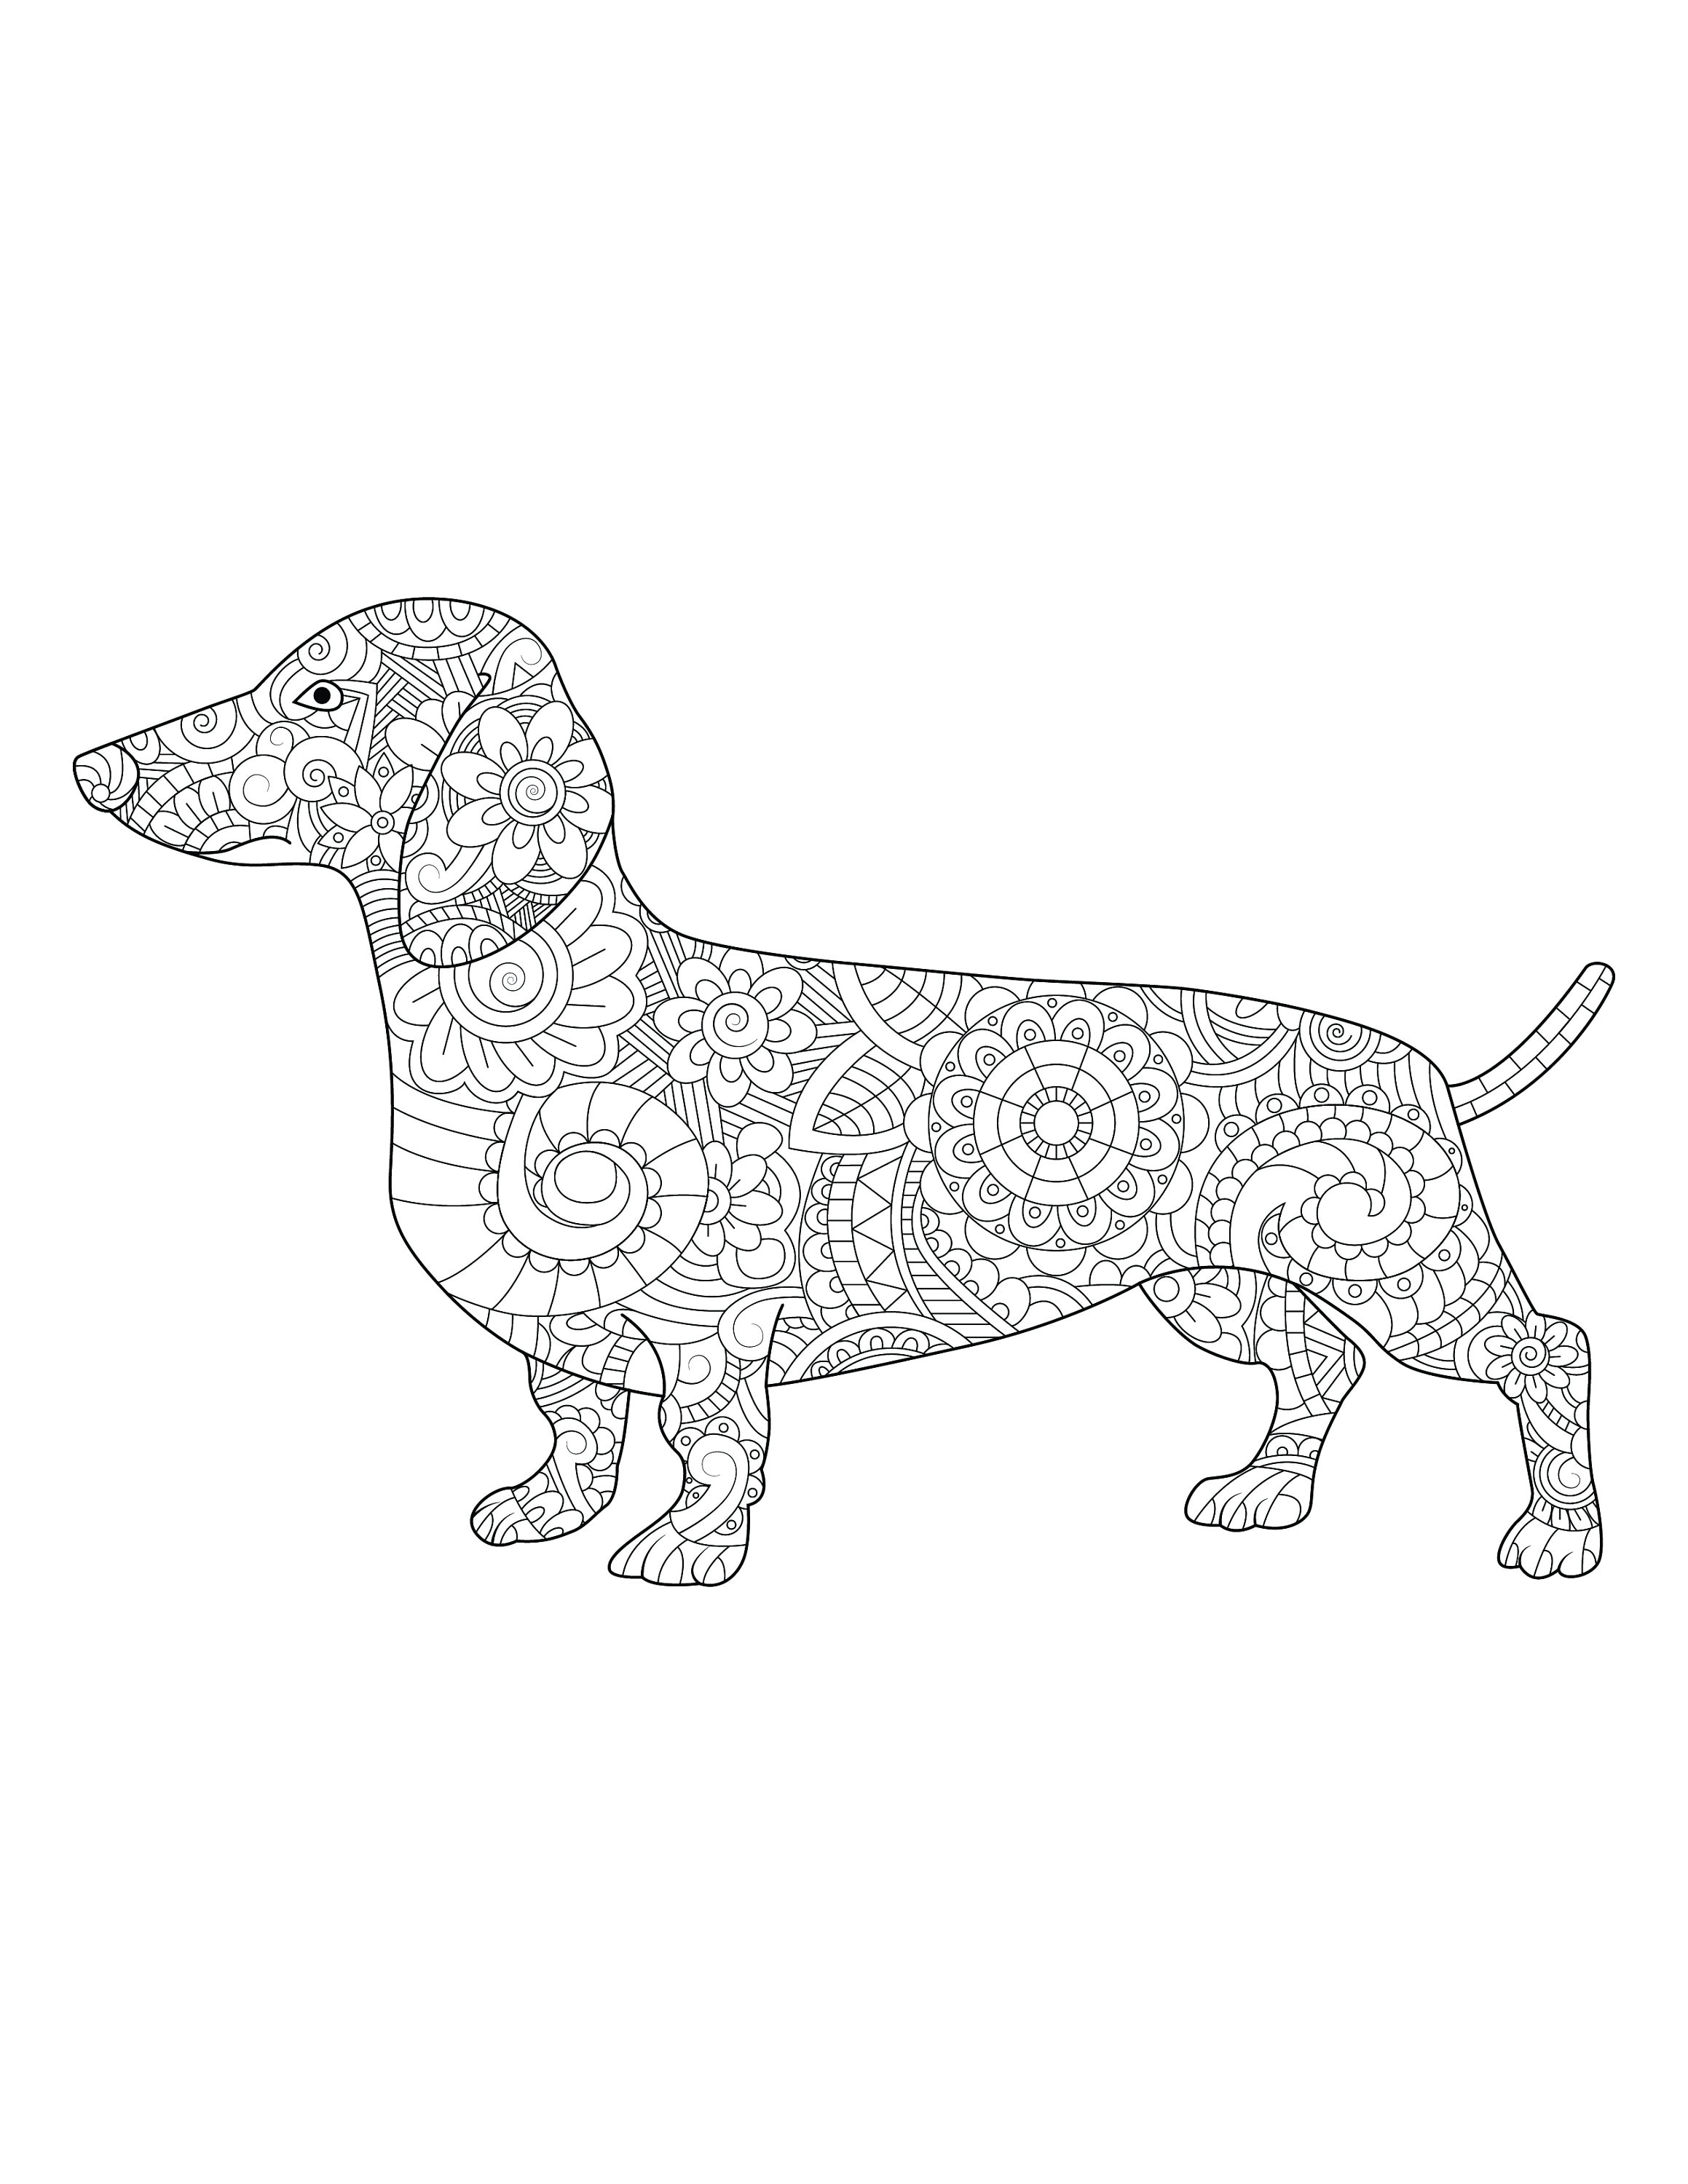 Dachshund dog coloring page zen coloring digital coloringinstant download printable coloring sheet pdf